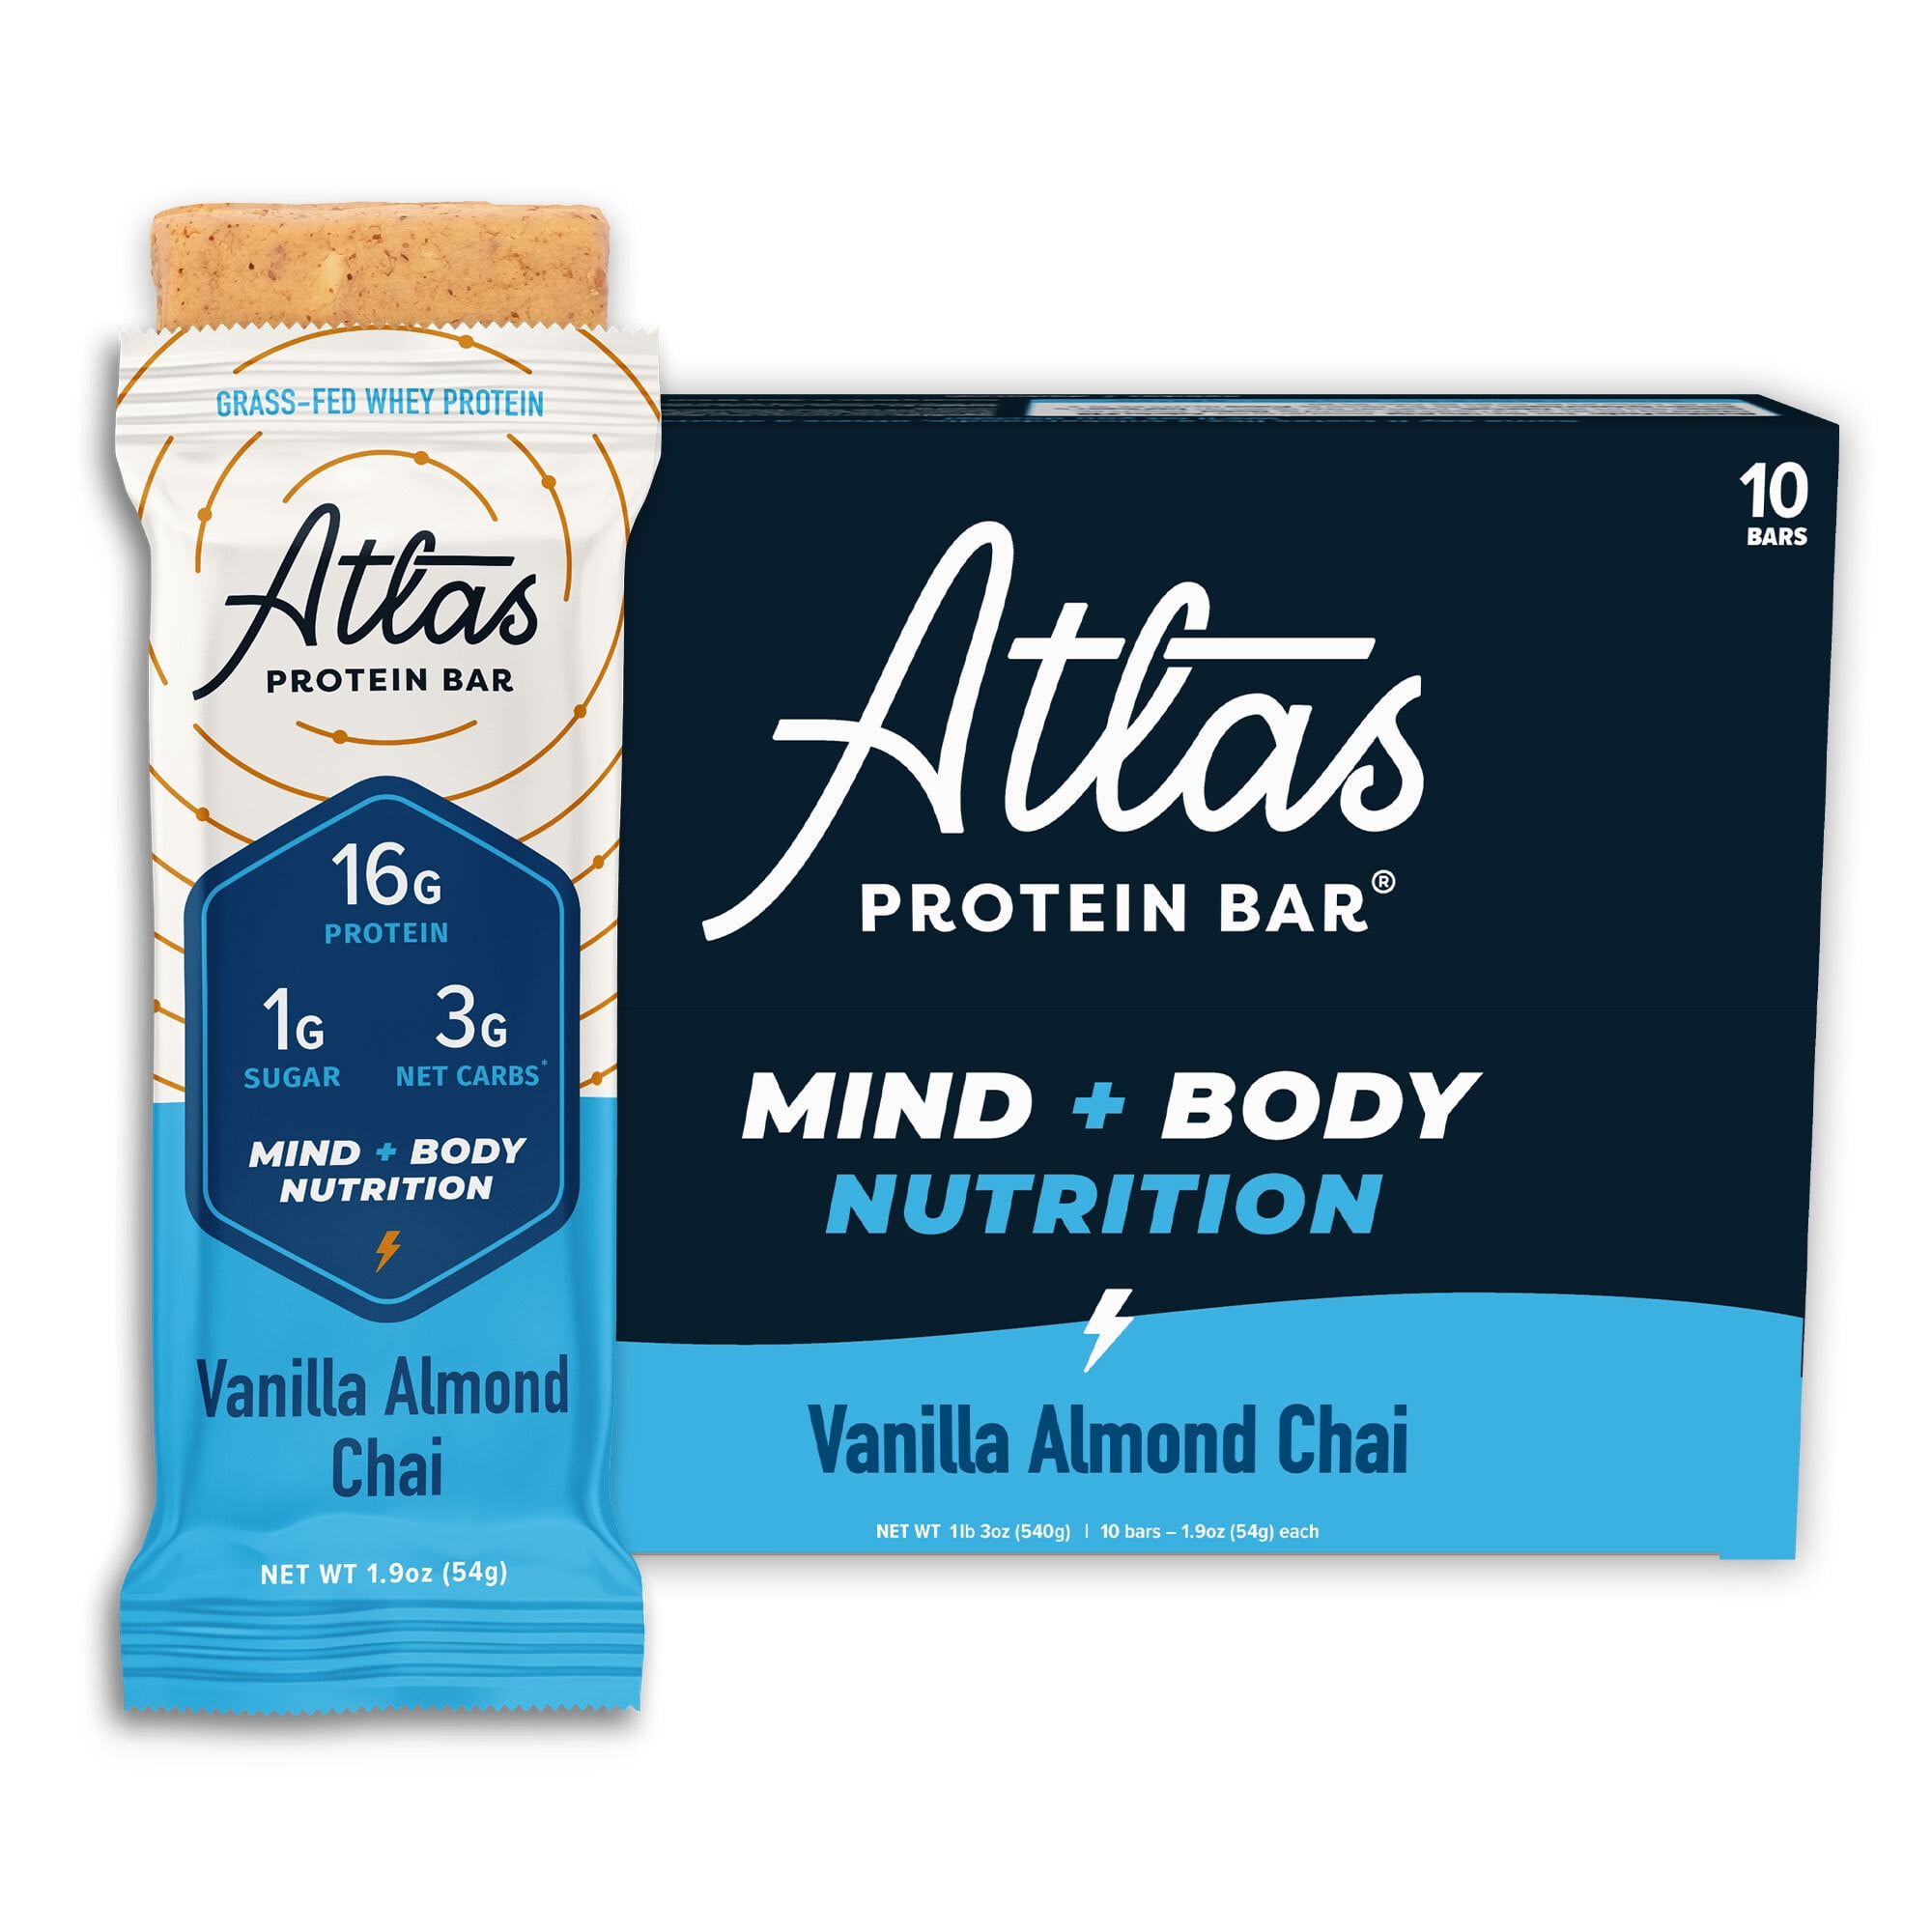 Atlas Mind + Body Protein Bar, Keto & Low Carb, 15g Protein, 1g Sugar, Vanilla Almond Chai, 10 Count